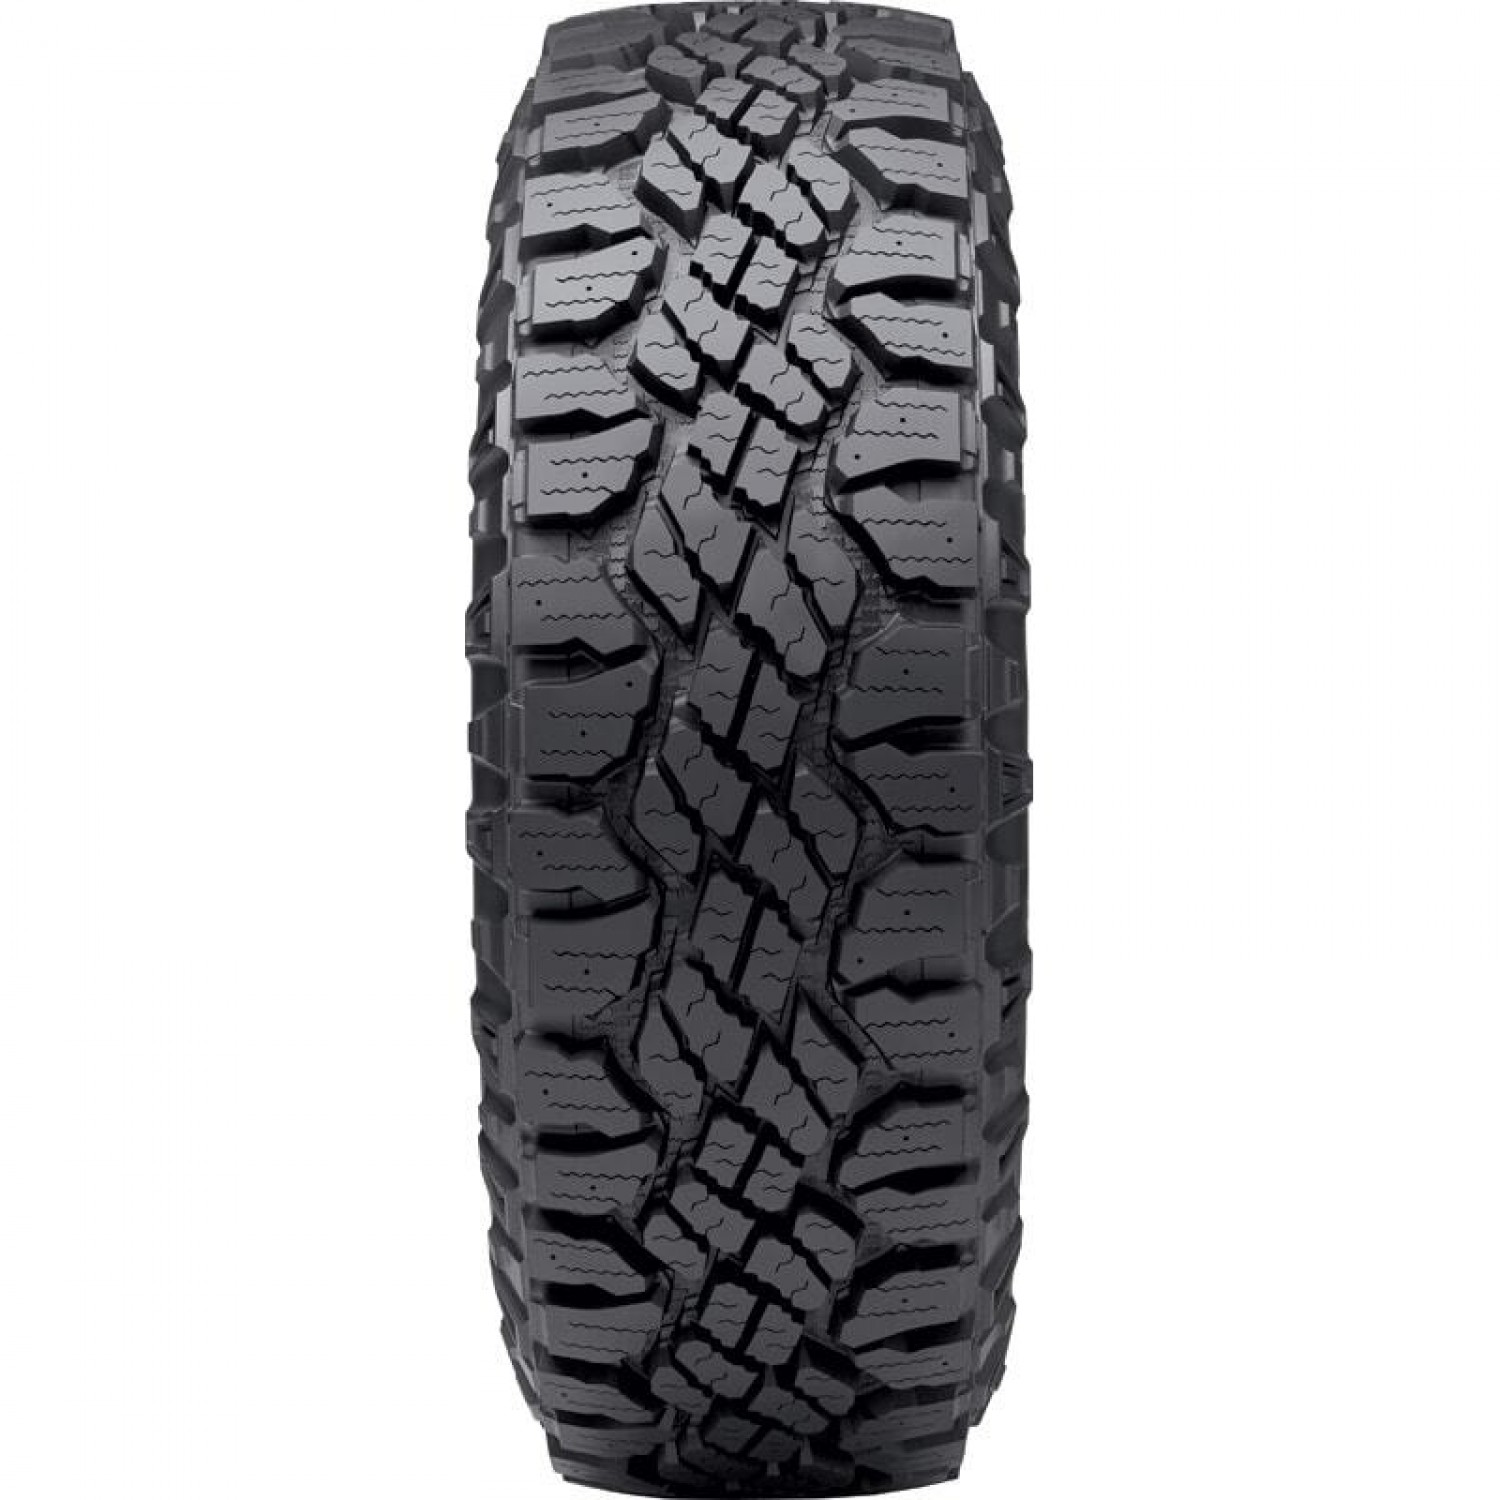 Goodyear Wrangler DuraTrac Black Sidewall Tire (LT295/65R18 127P) vzn121175